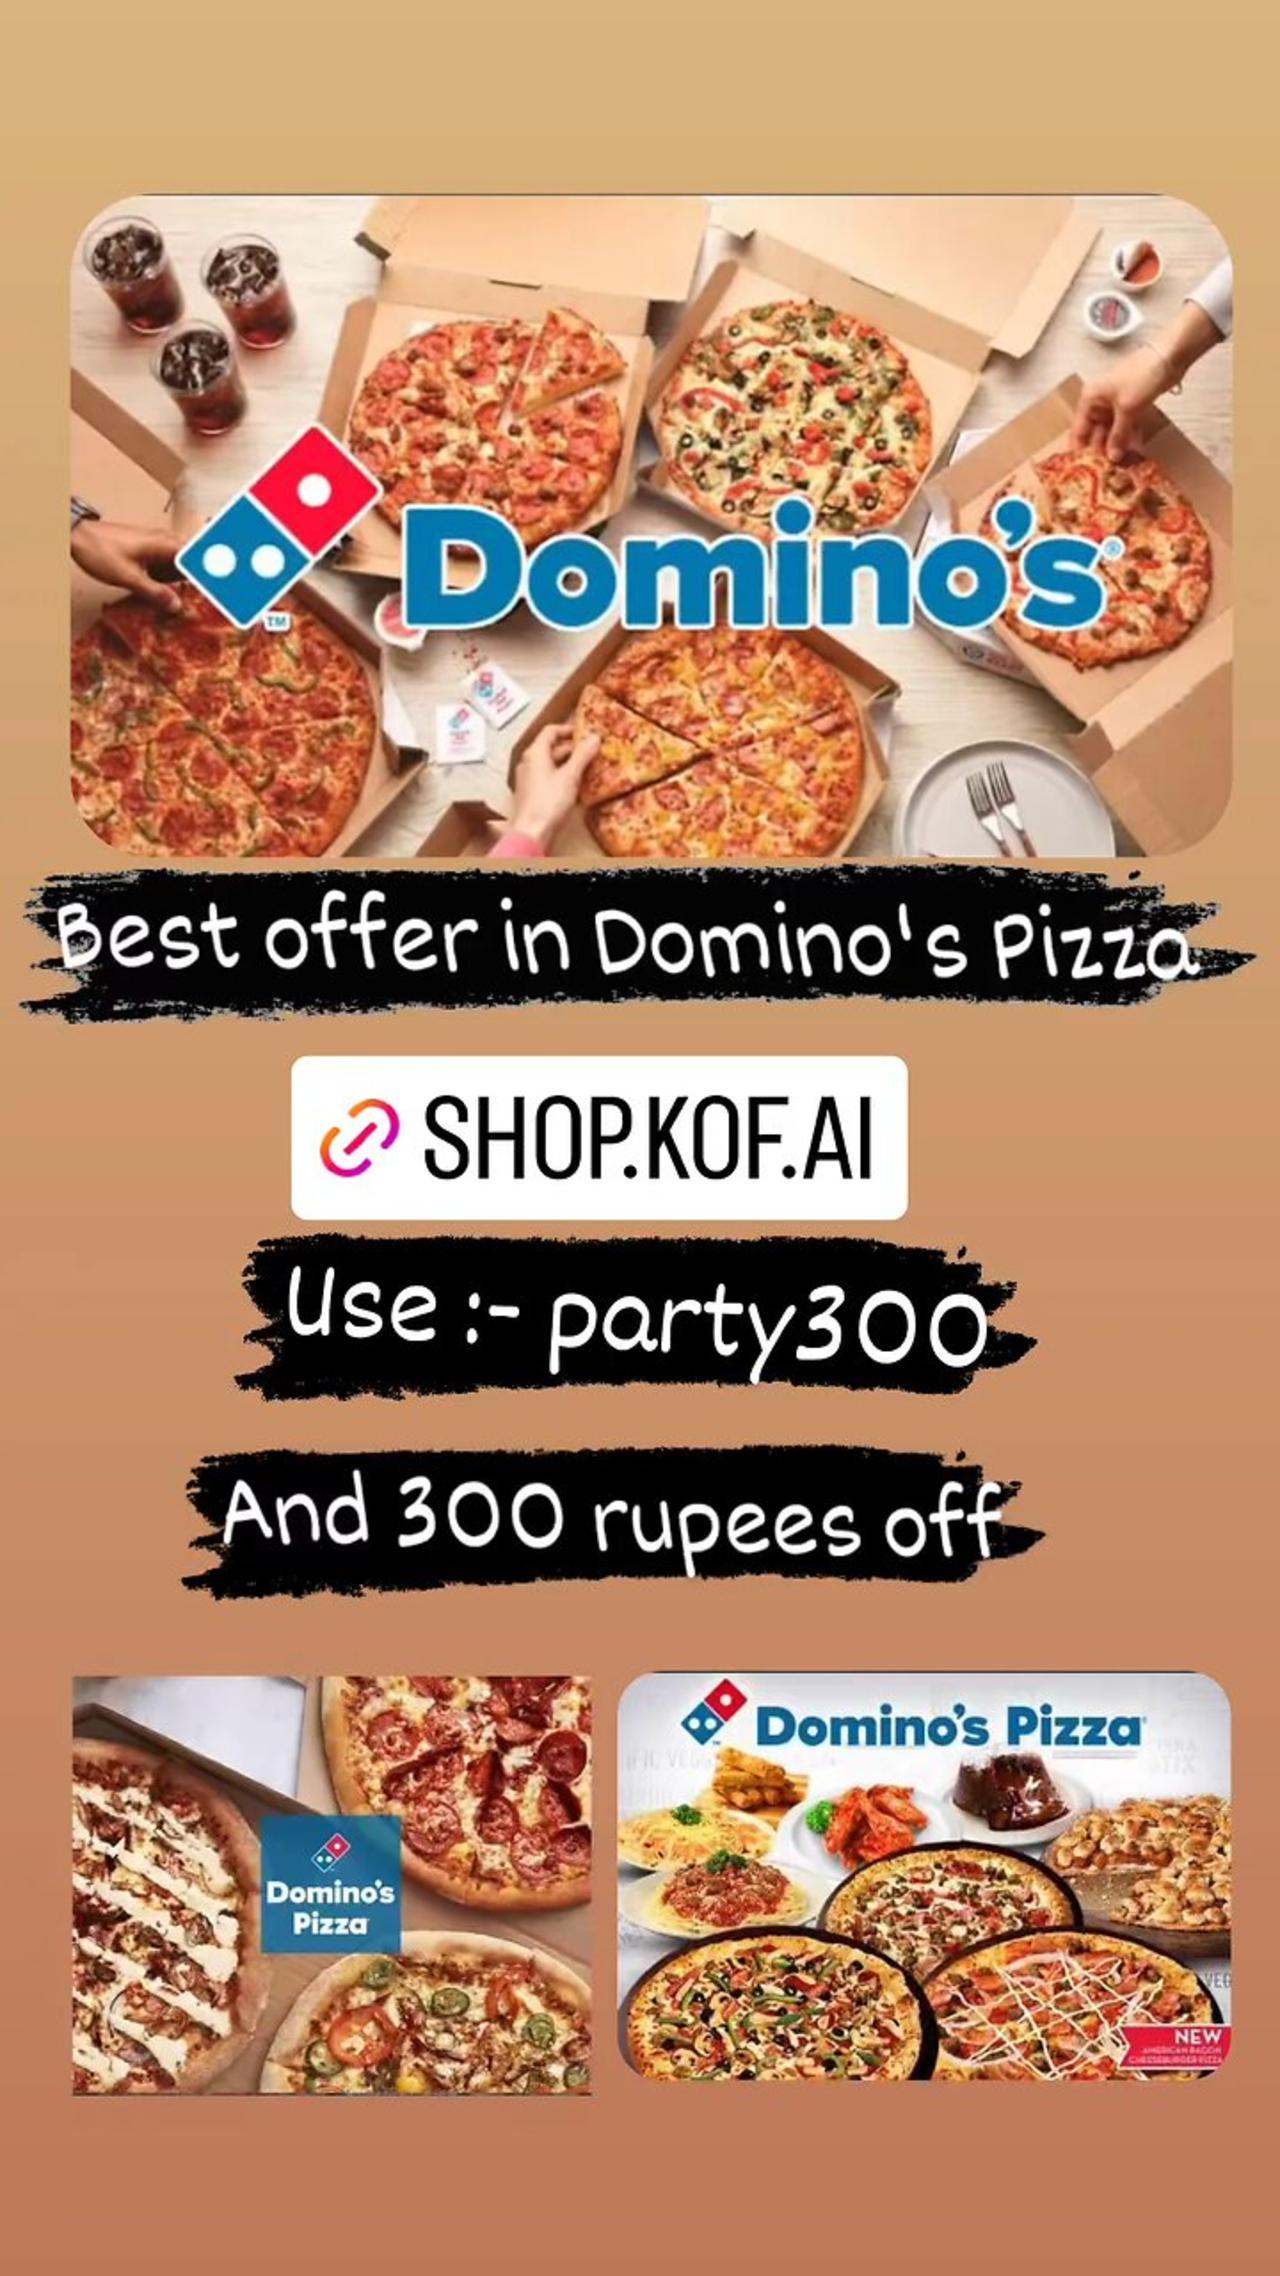 Domino's Pizza offer